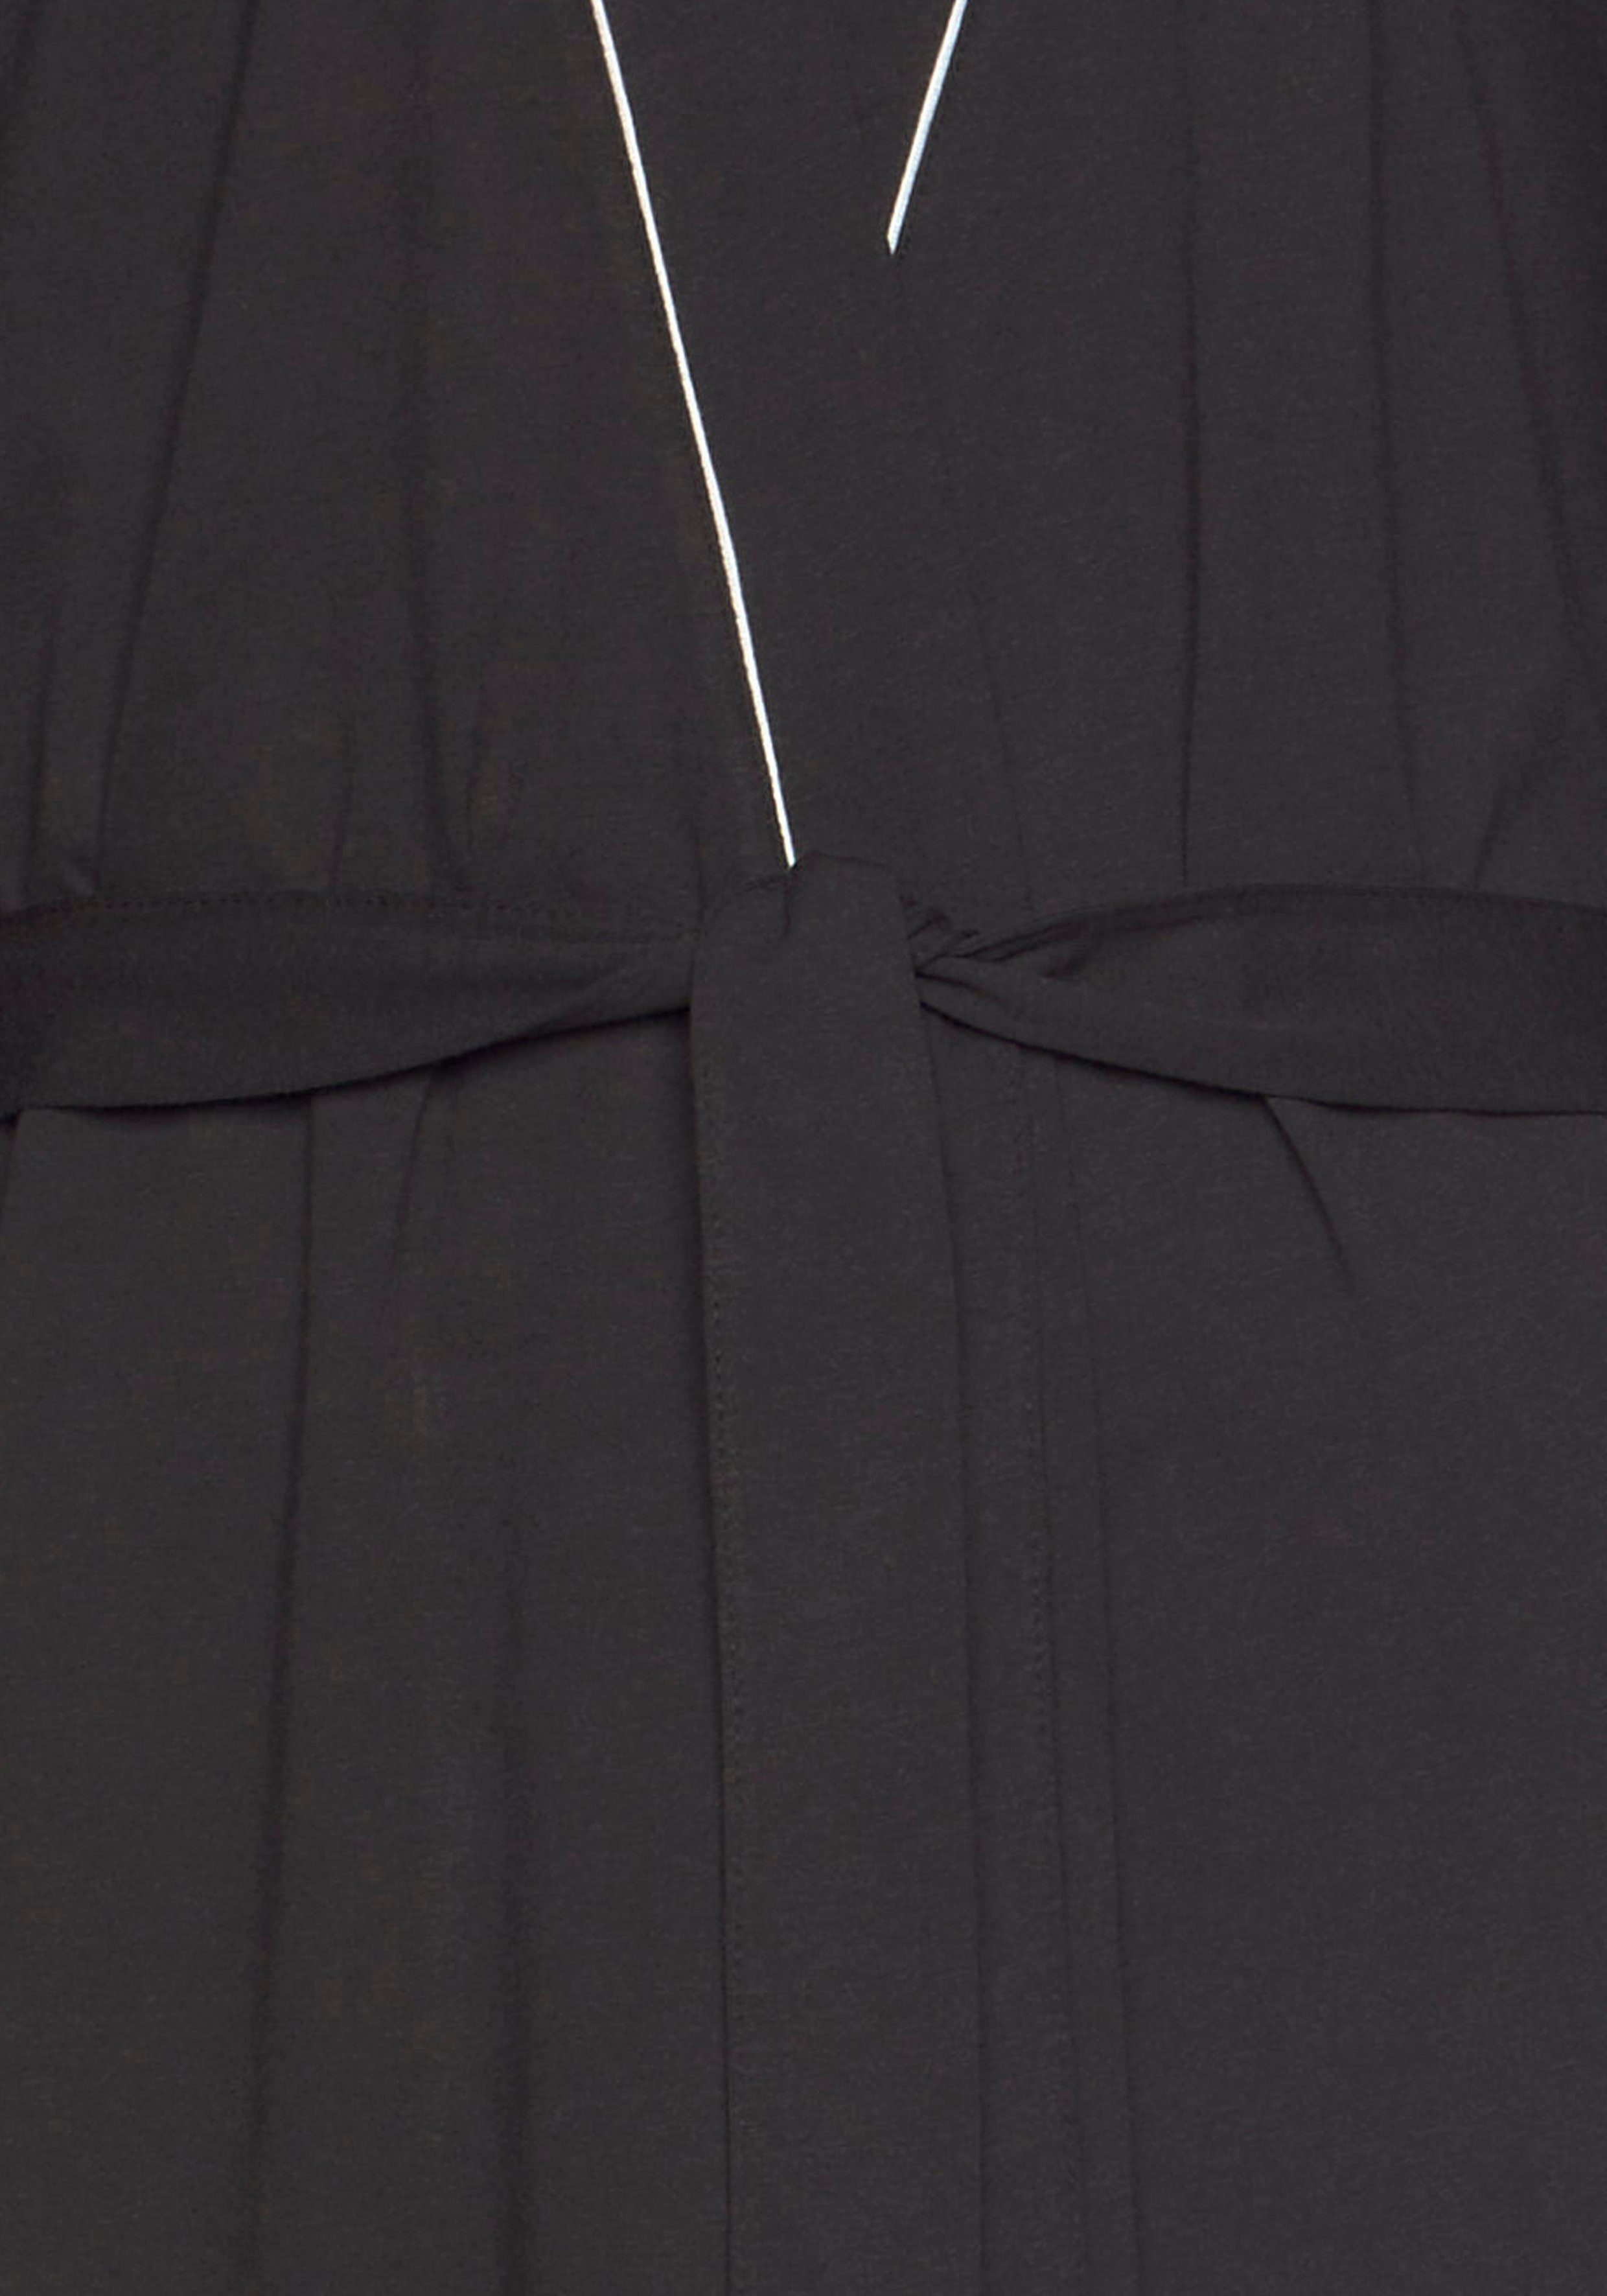 Vivance Dreams Kimono, Kurzform, Gürtel, Kontrastpaspel-Details Kimono-Kragen, mit Baumwoll-Mix, schwarz